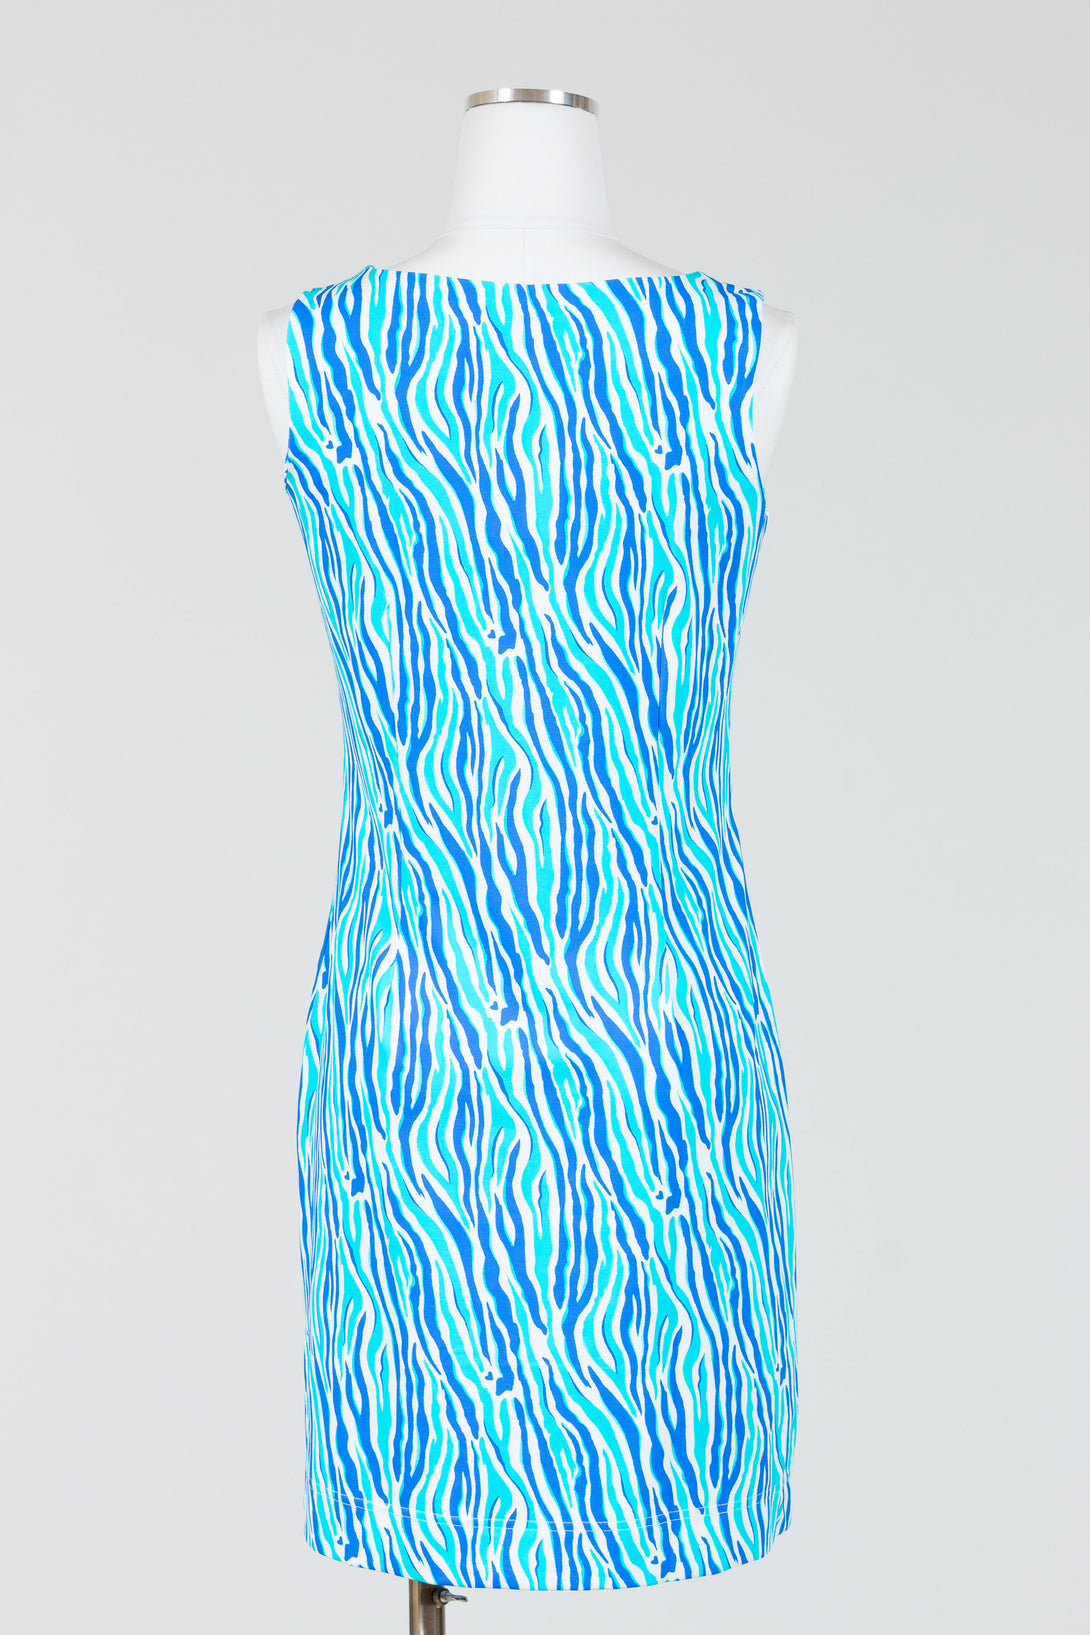 LuluB-Sleeveless-Travel-Dress-Blue-Waves